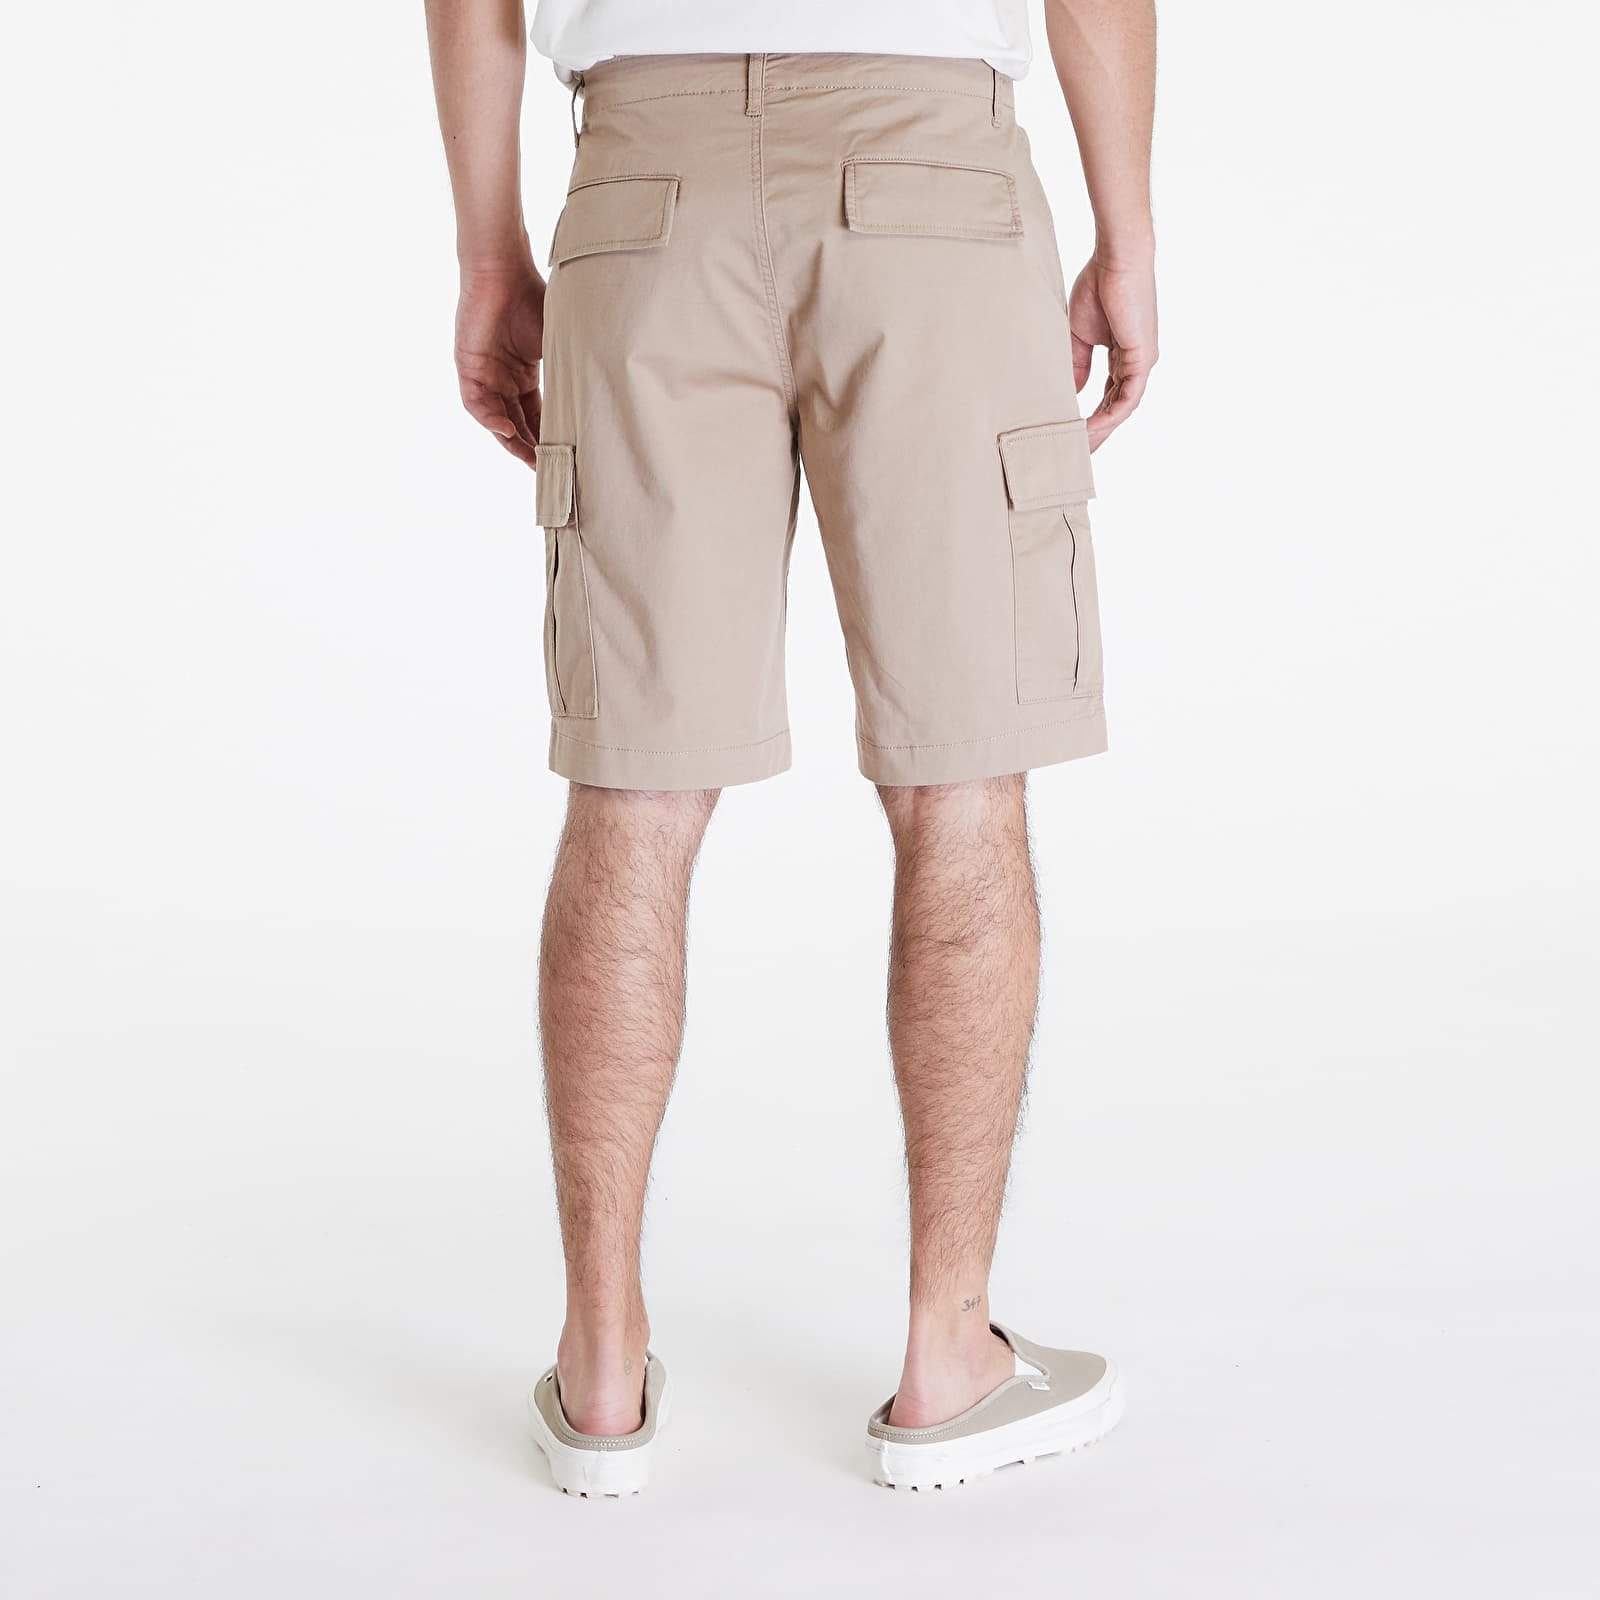 Men's shorts Bermuda